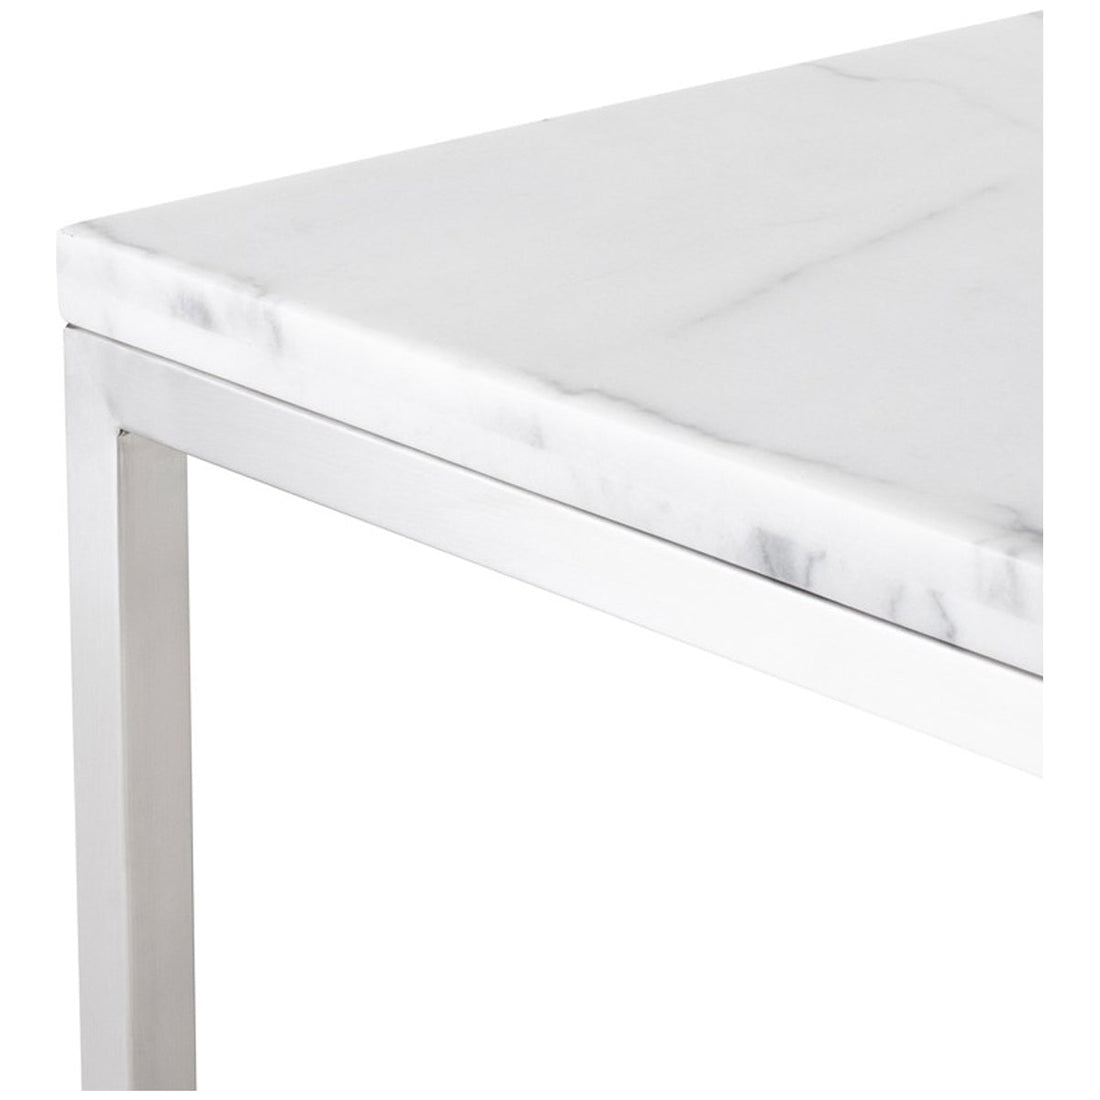 Nuevo Living Verona Counter Table - White Marble